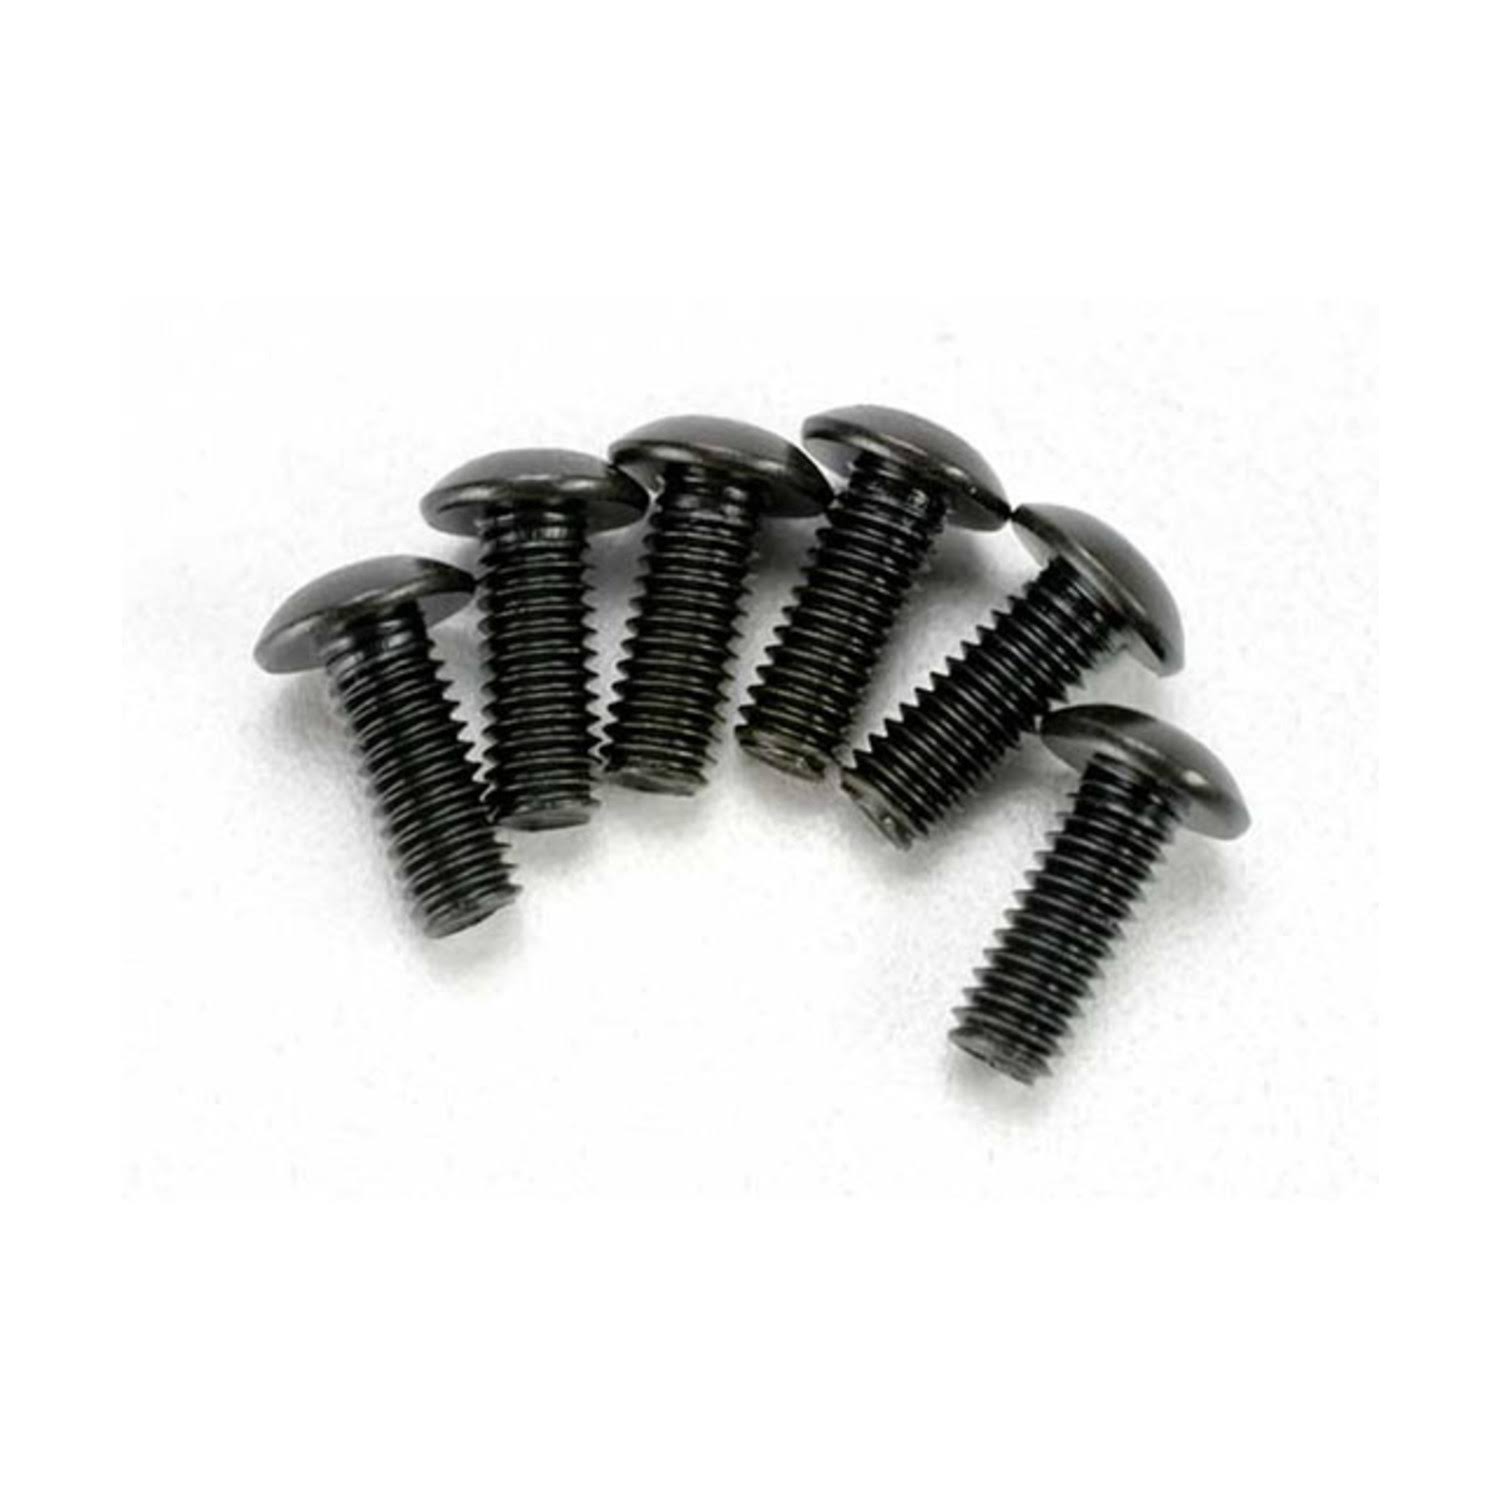 Traxxas 3937 Button Head Machine Screw - Black, 4 X 12mm, 6ct